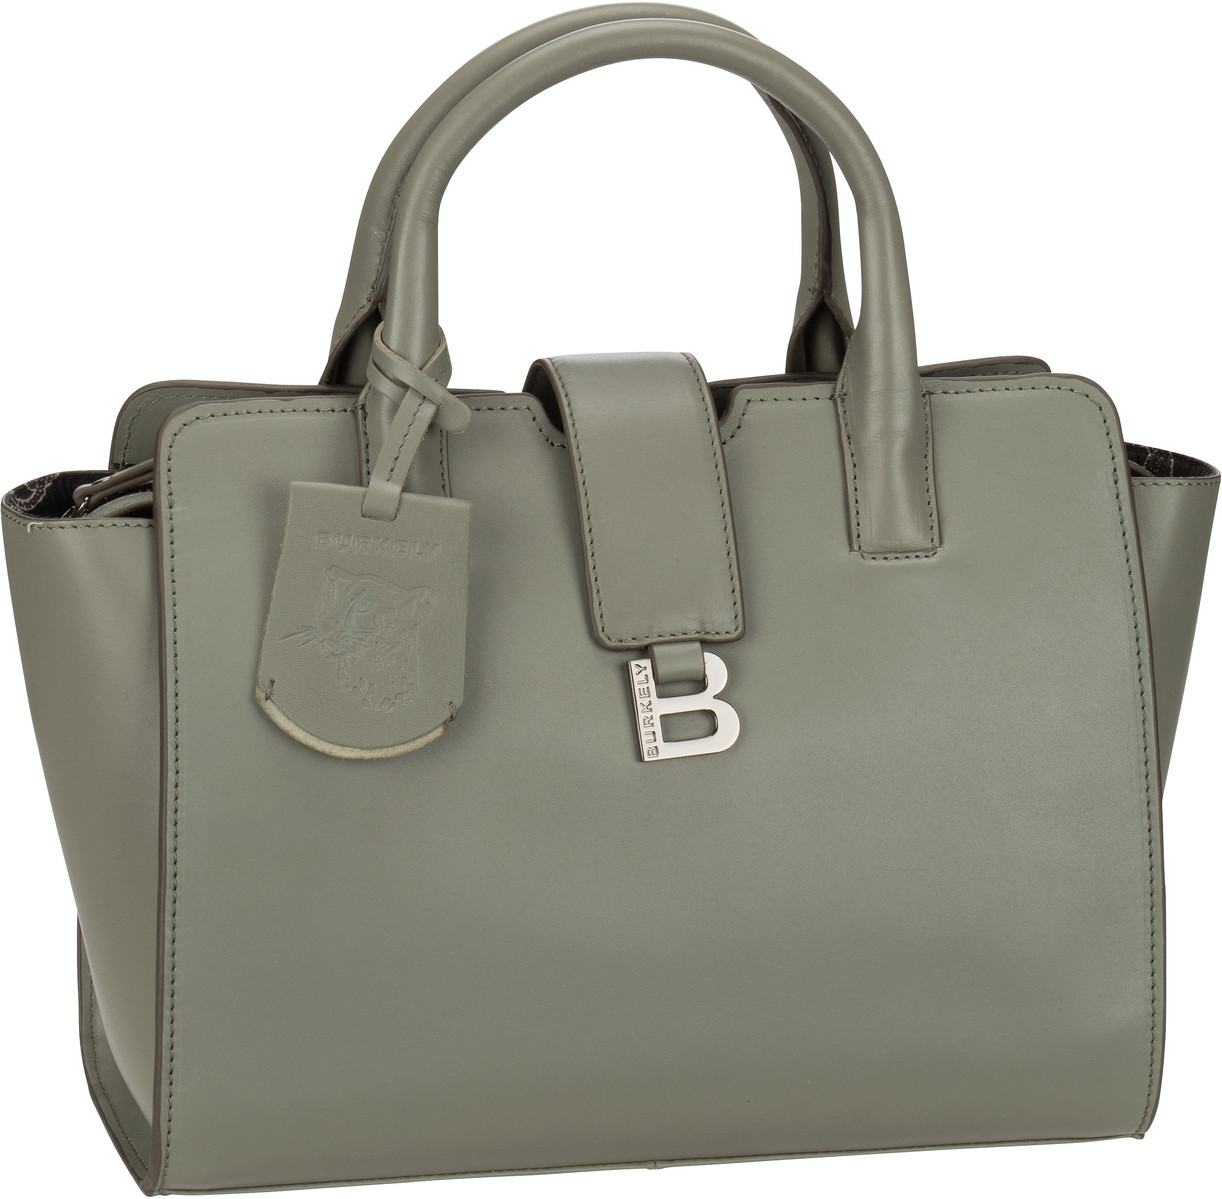 Burkely Modest Meghan Handbag - Light Green